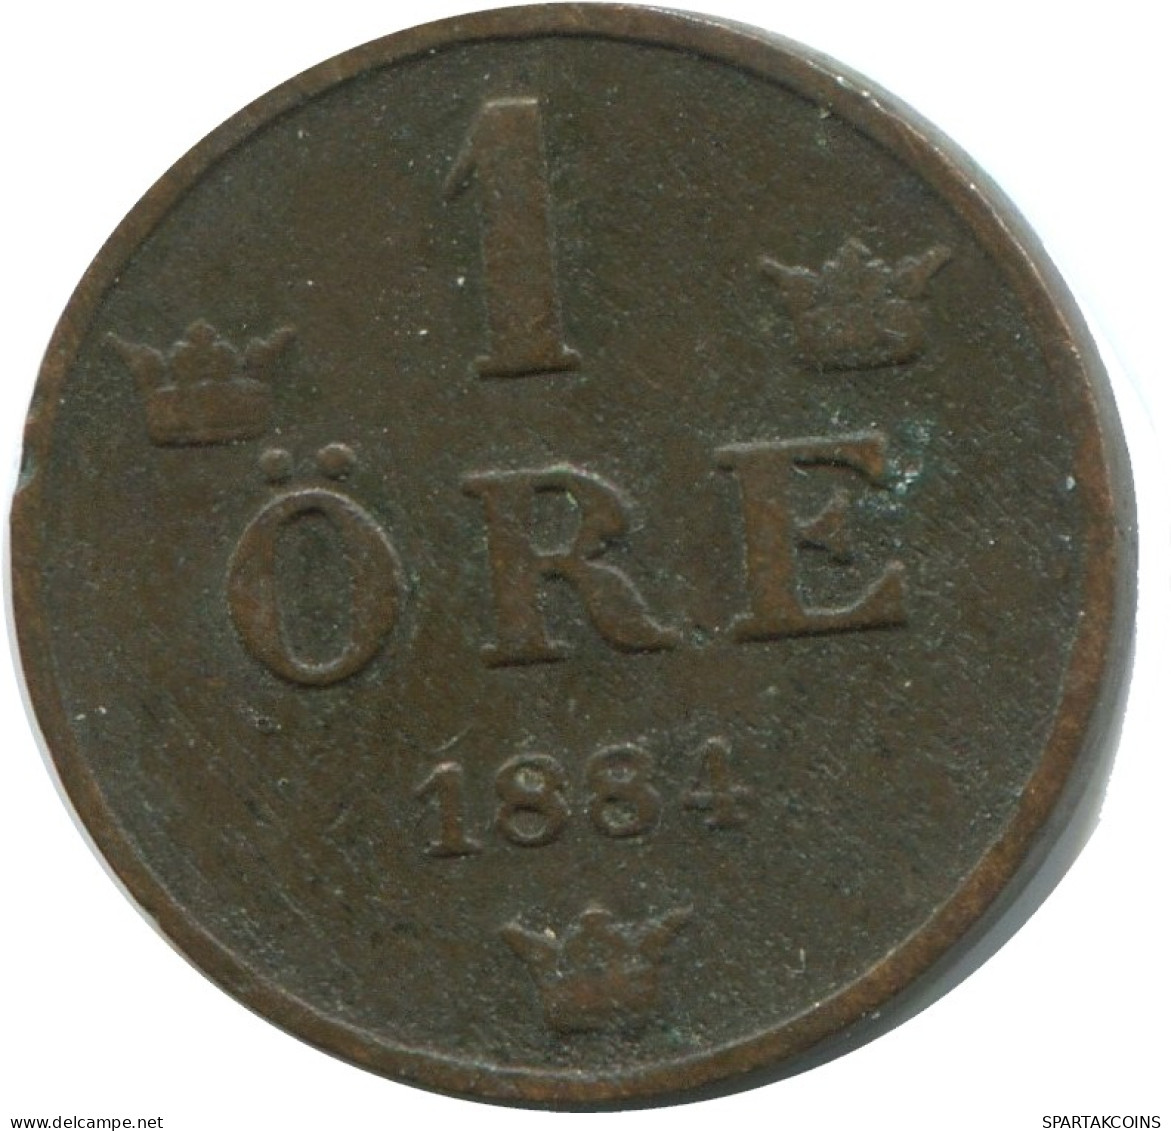 1 ORE 1884 SUECIA SWEDEN Moneda #AD410.2.E.A - Schweden